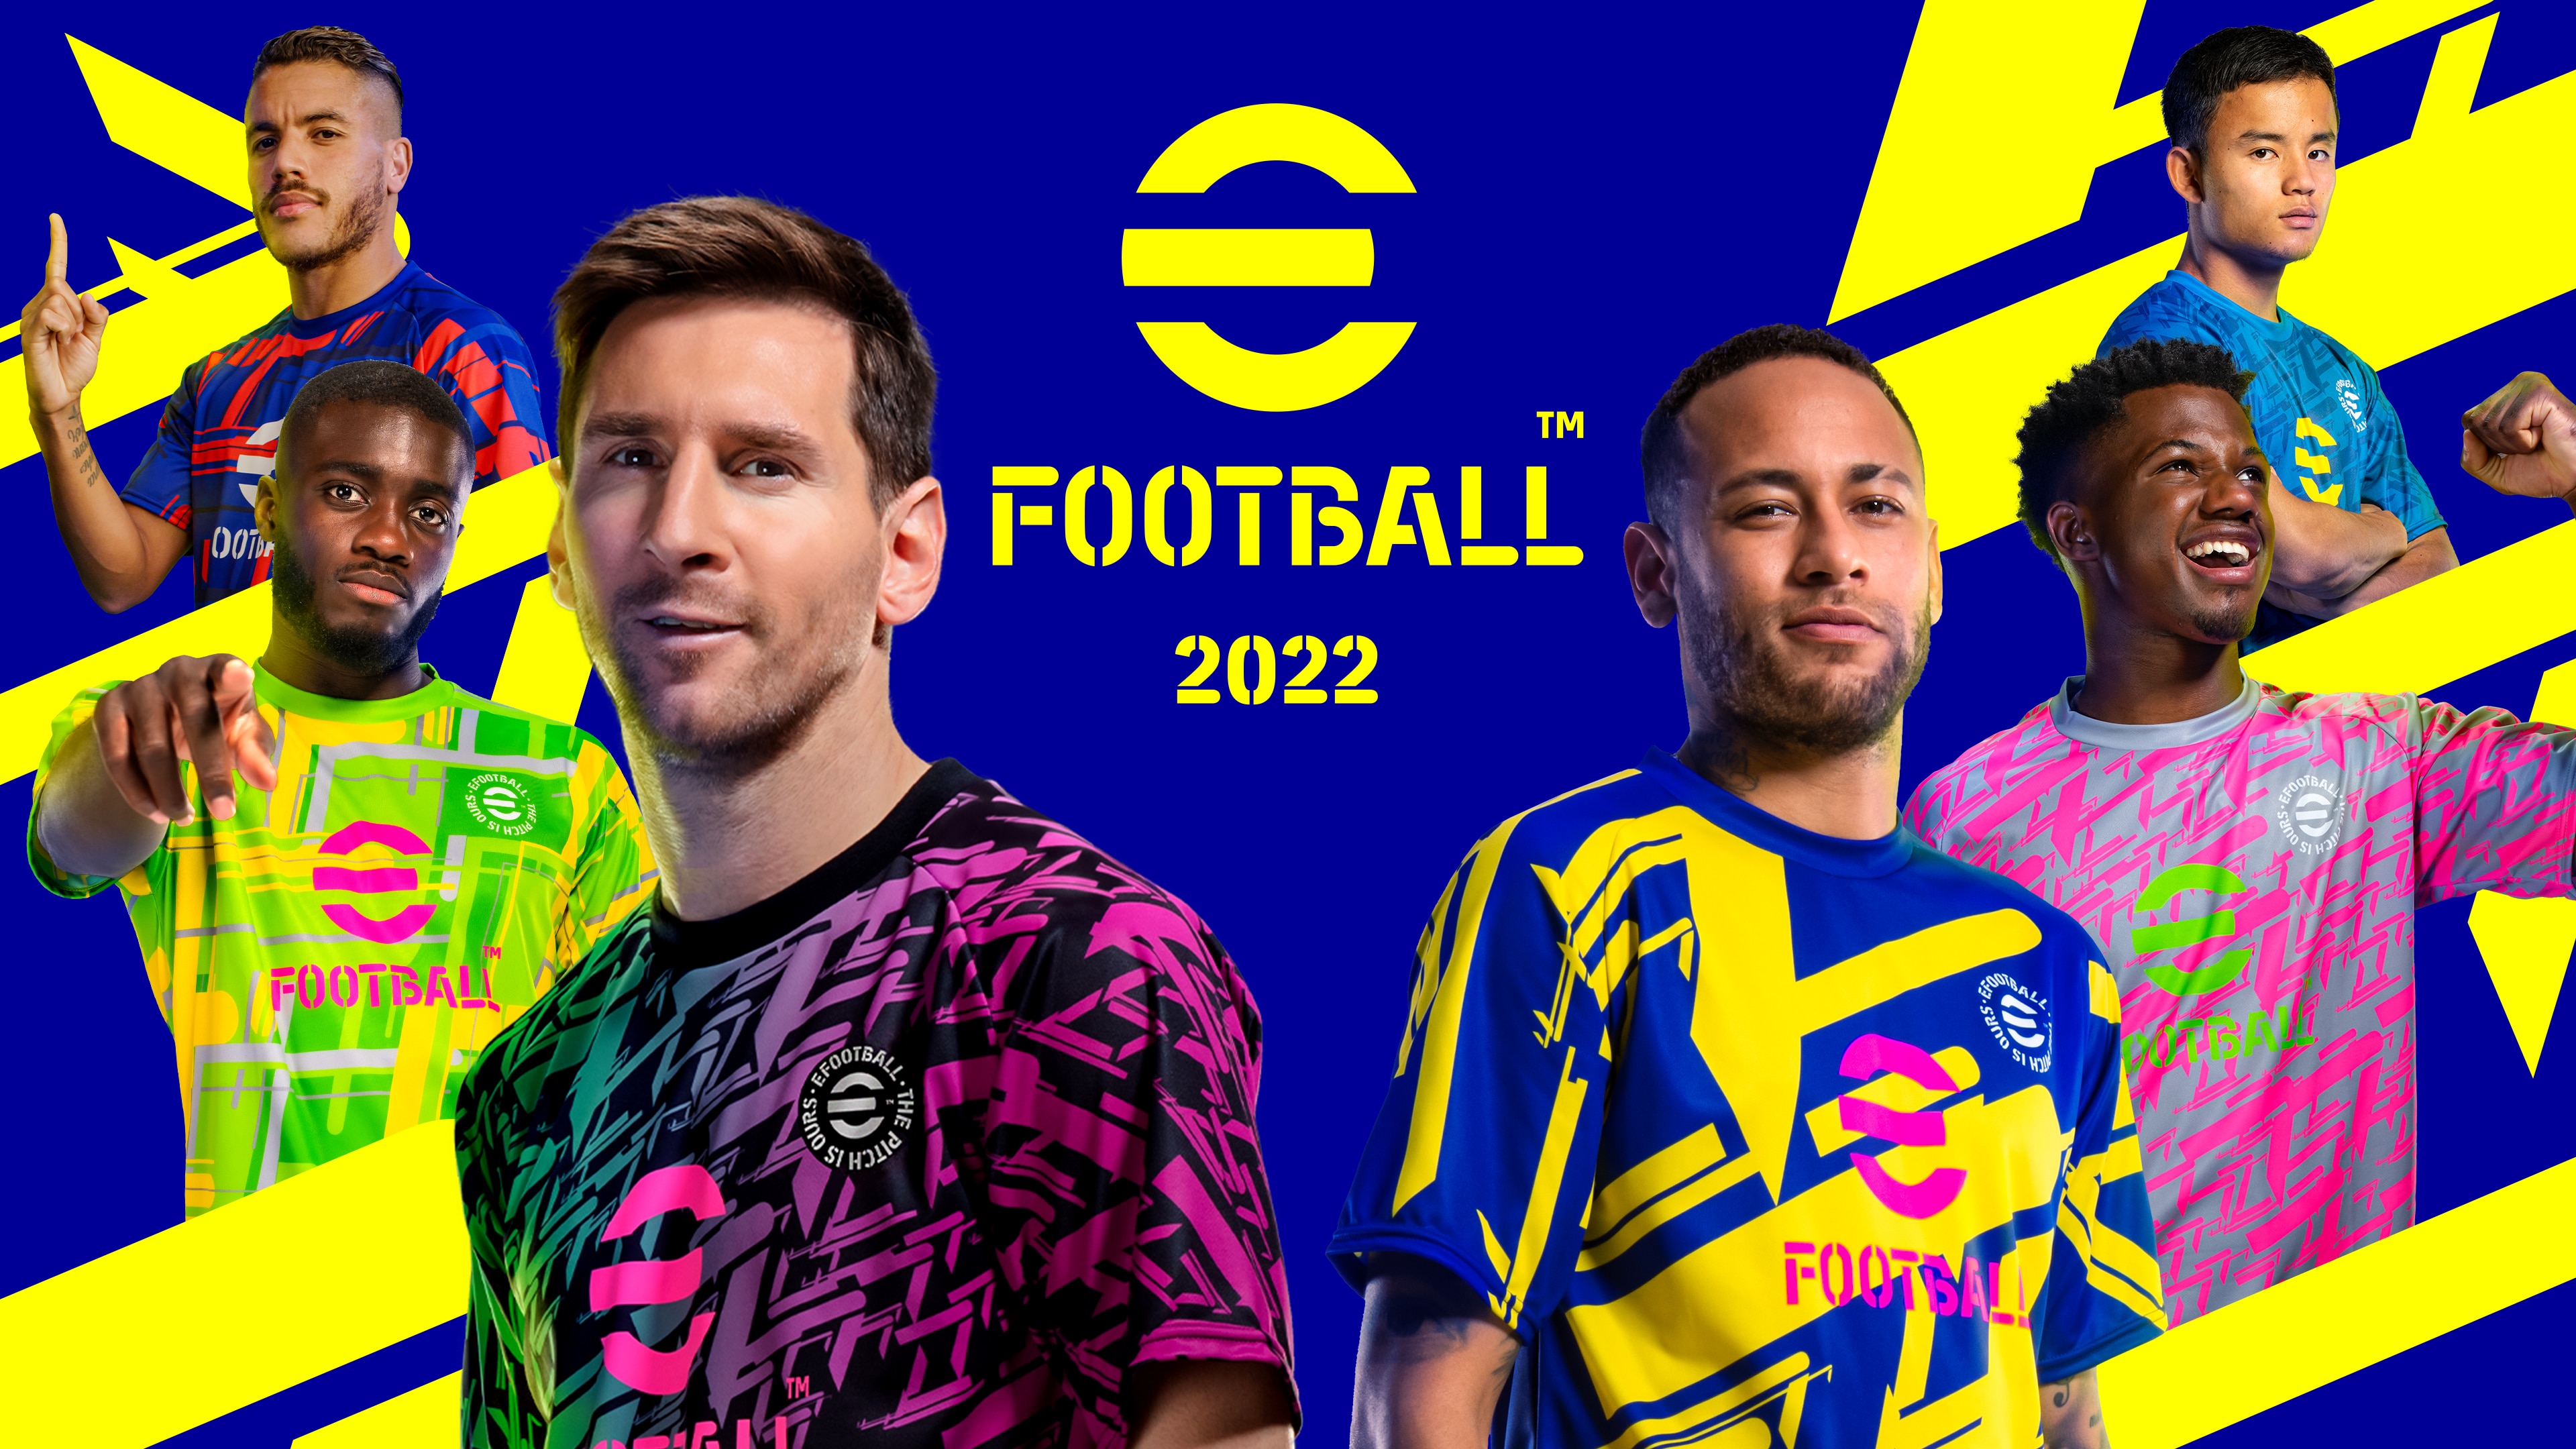 eFootball 2022 Wallpaper 4K, 2022 Games, Esports, Lionel Messi, Neymar Jr, Games